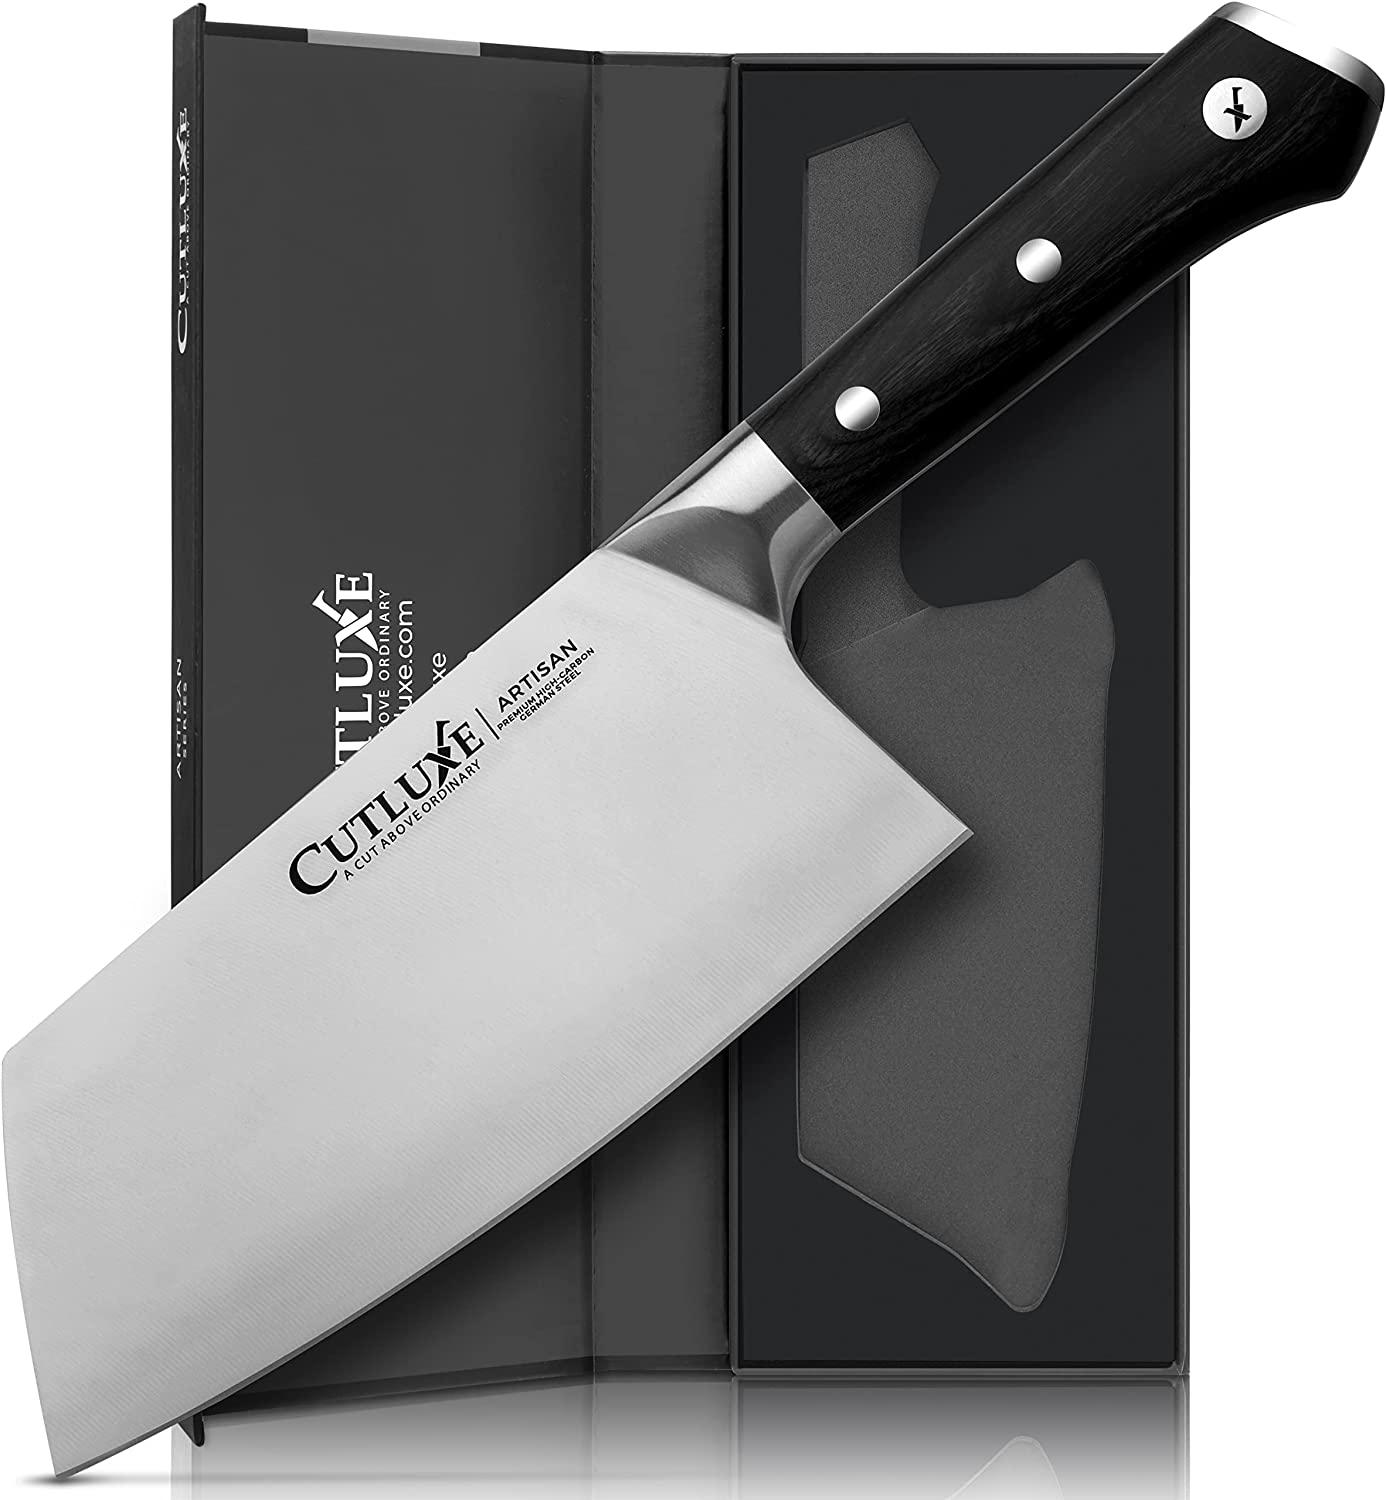 cleaver knife